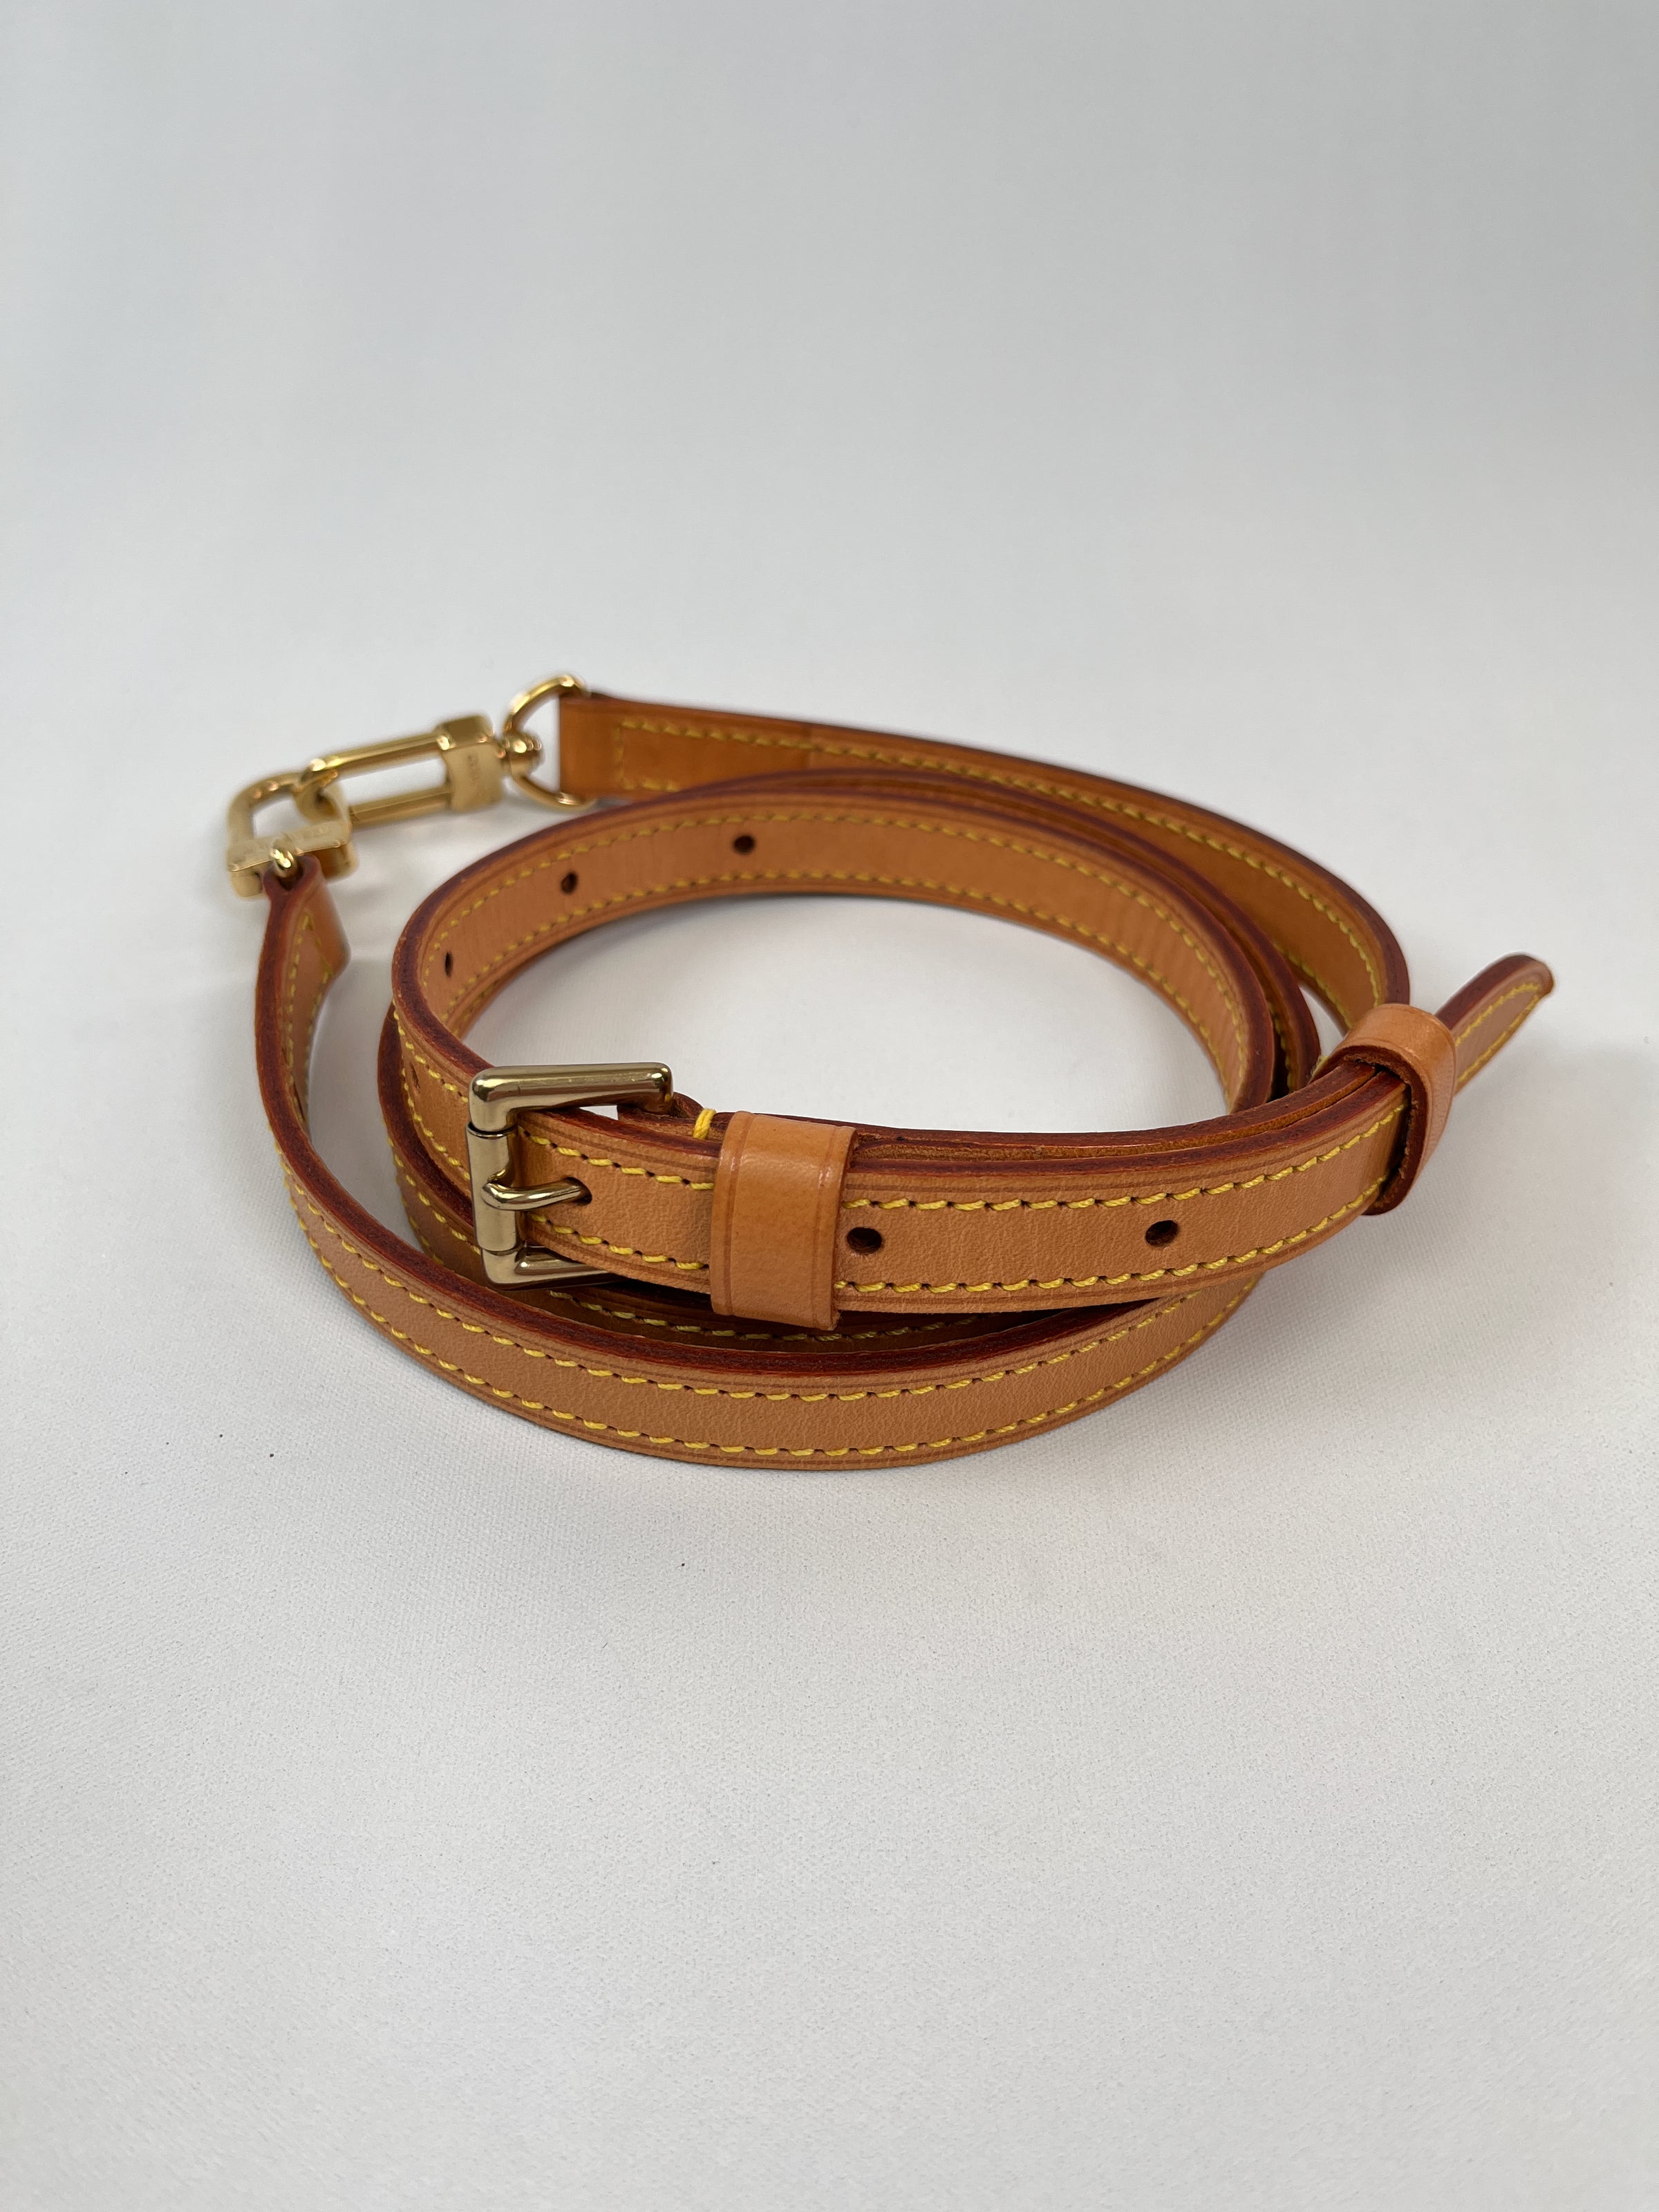 Louis Vuitton Adjustable Shoulder Strap 16MM - Brown Bag